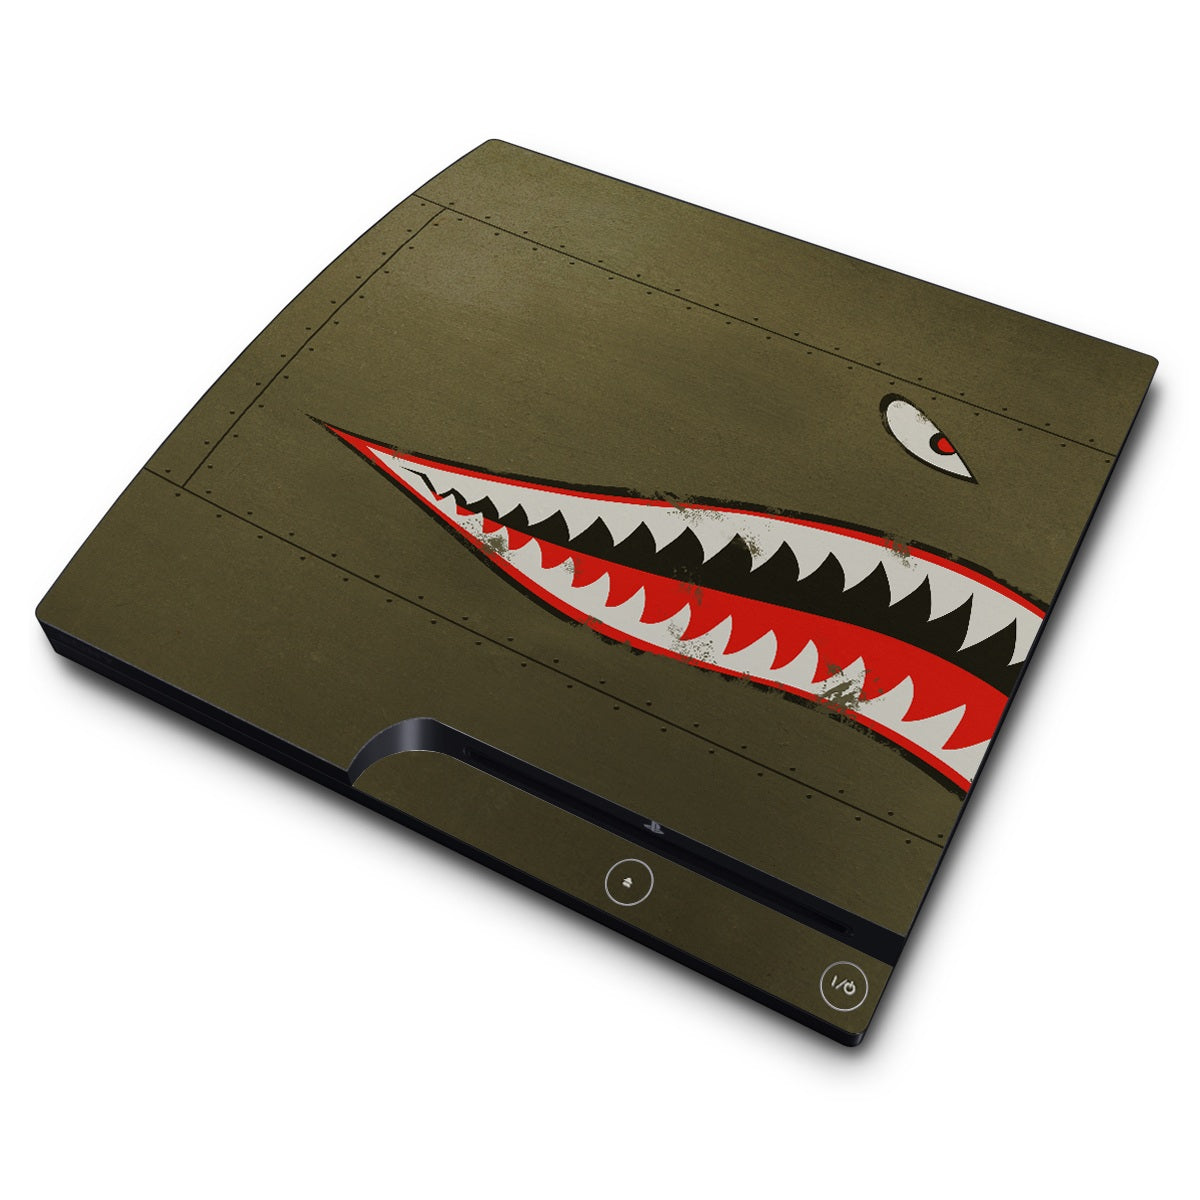 USAF Shark - Sony PS3 Slim Skin